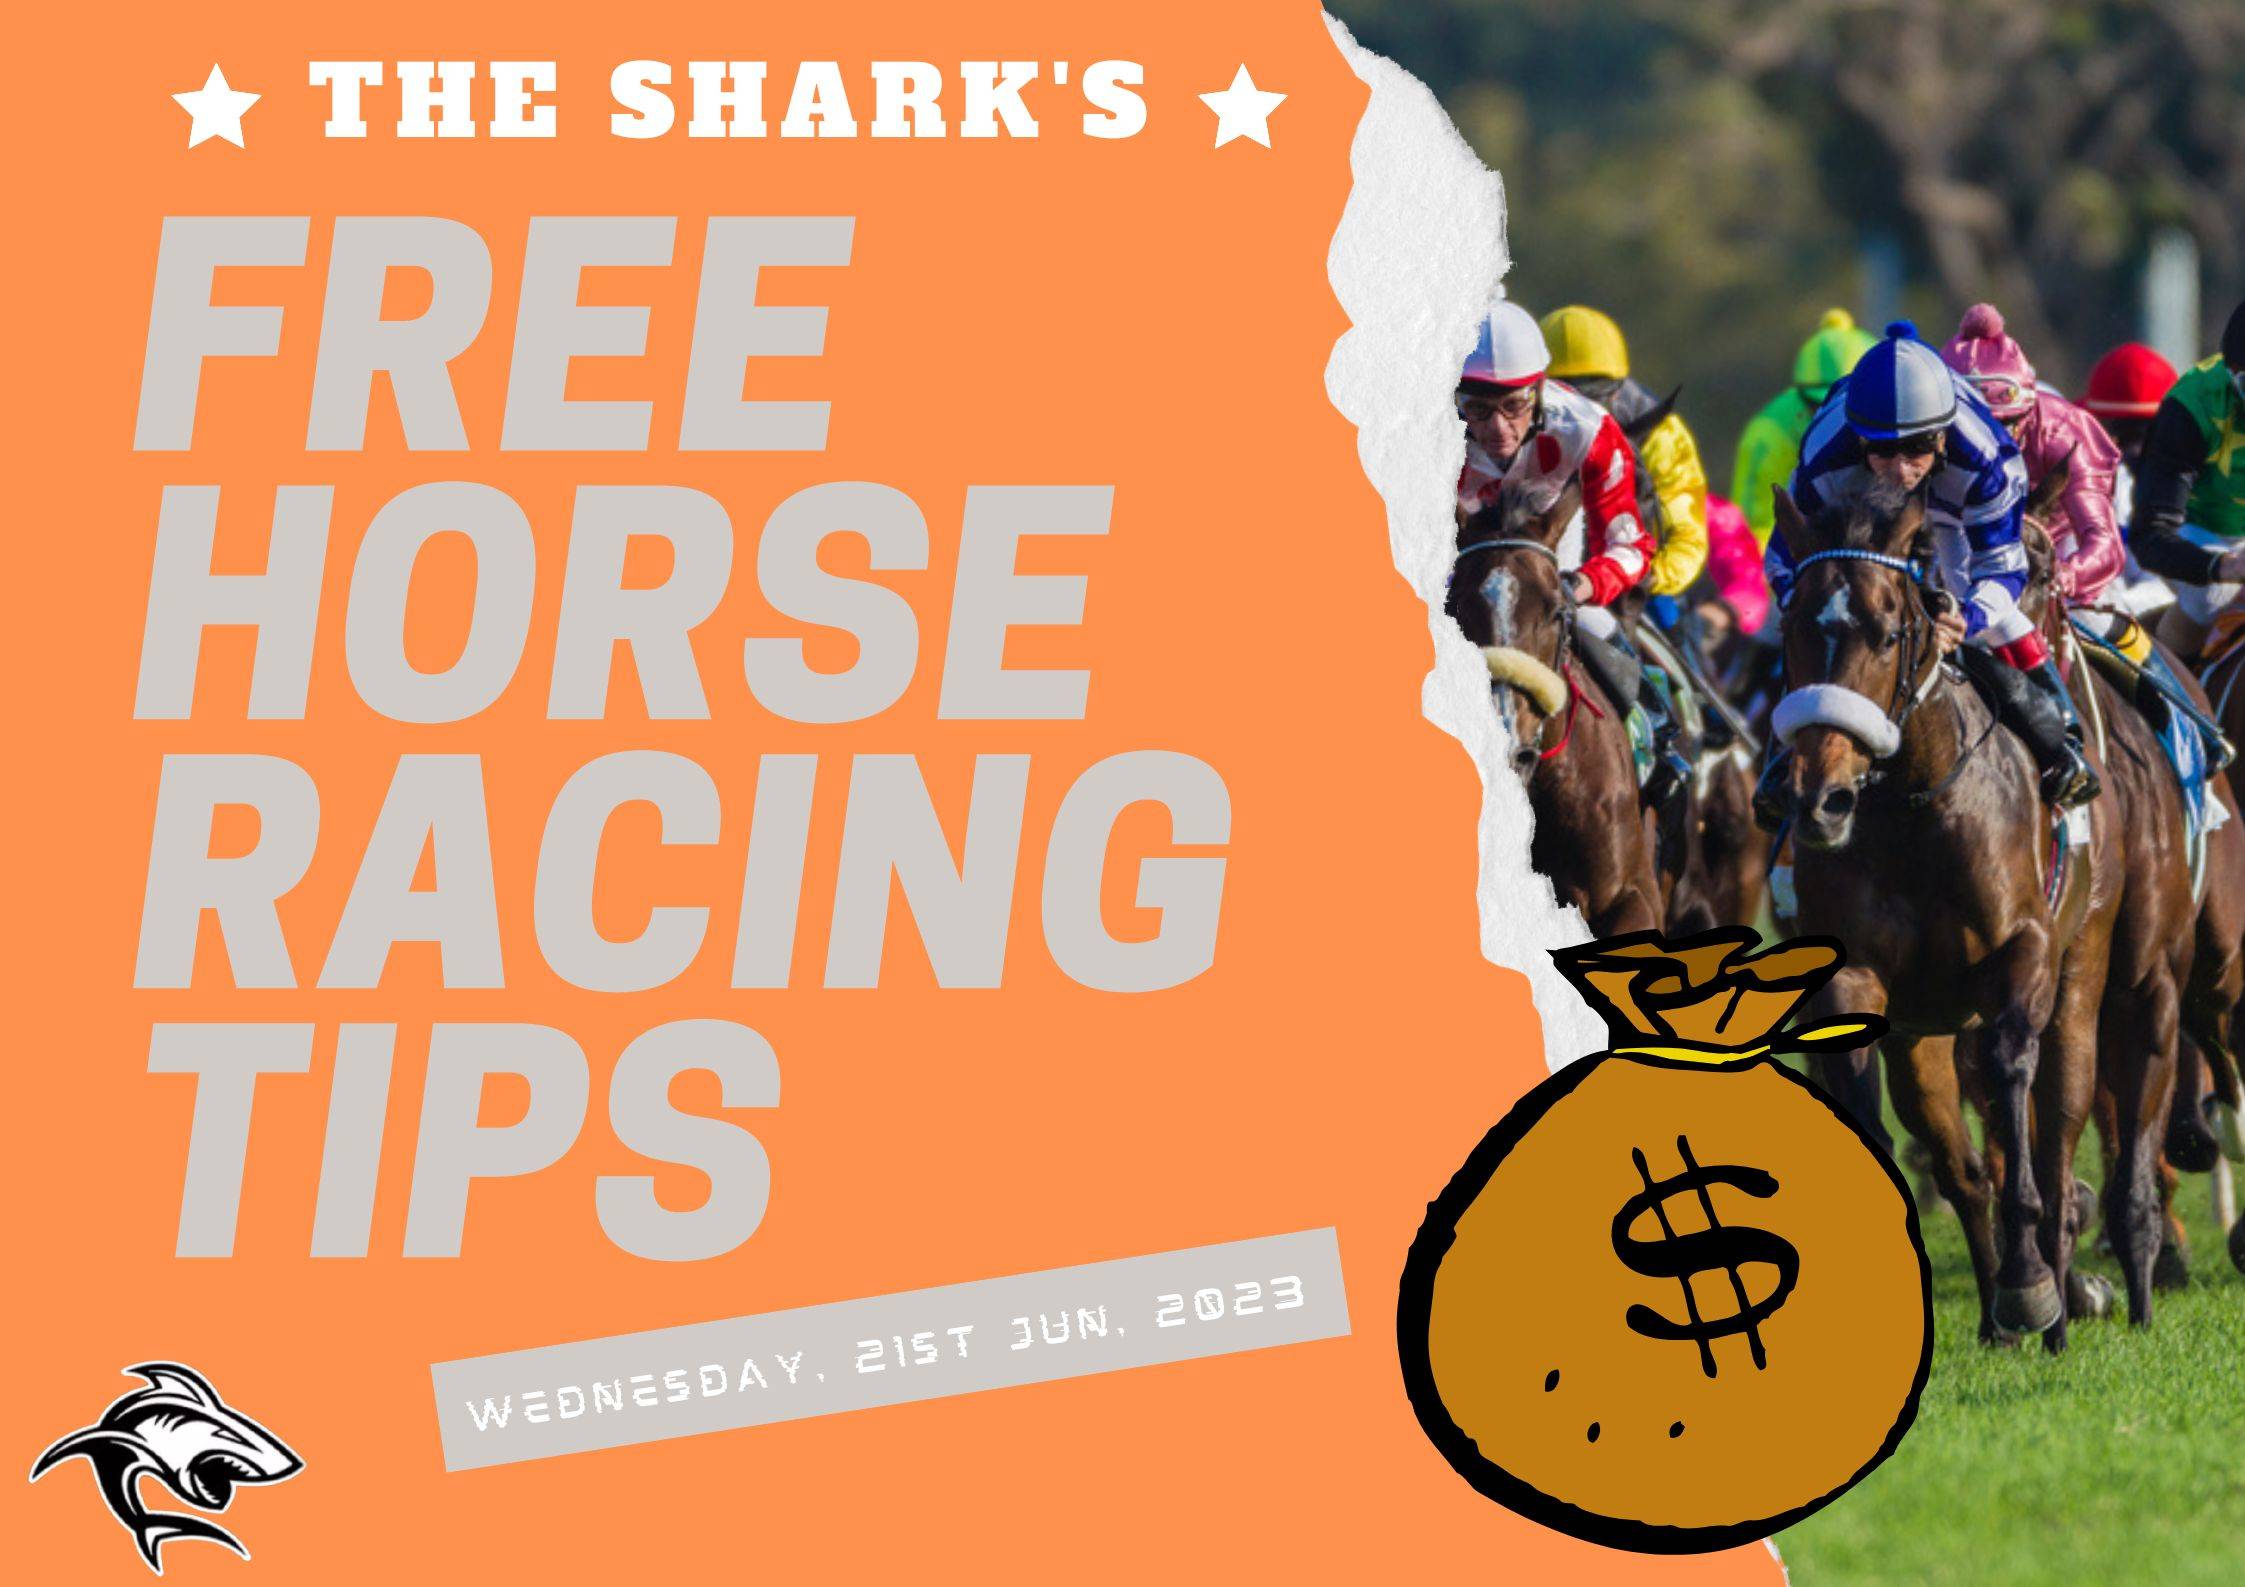 Free Horse Racing Tips - 21st Jun